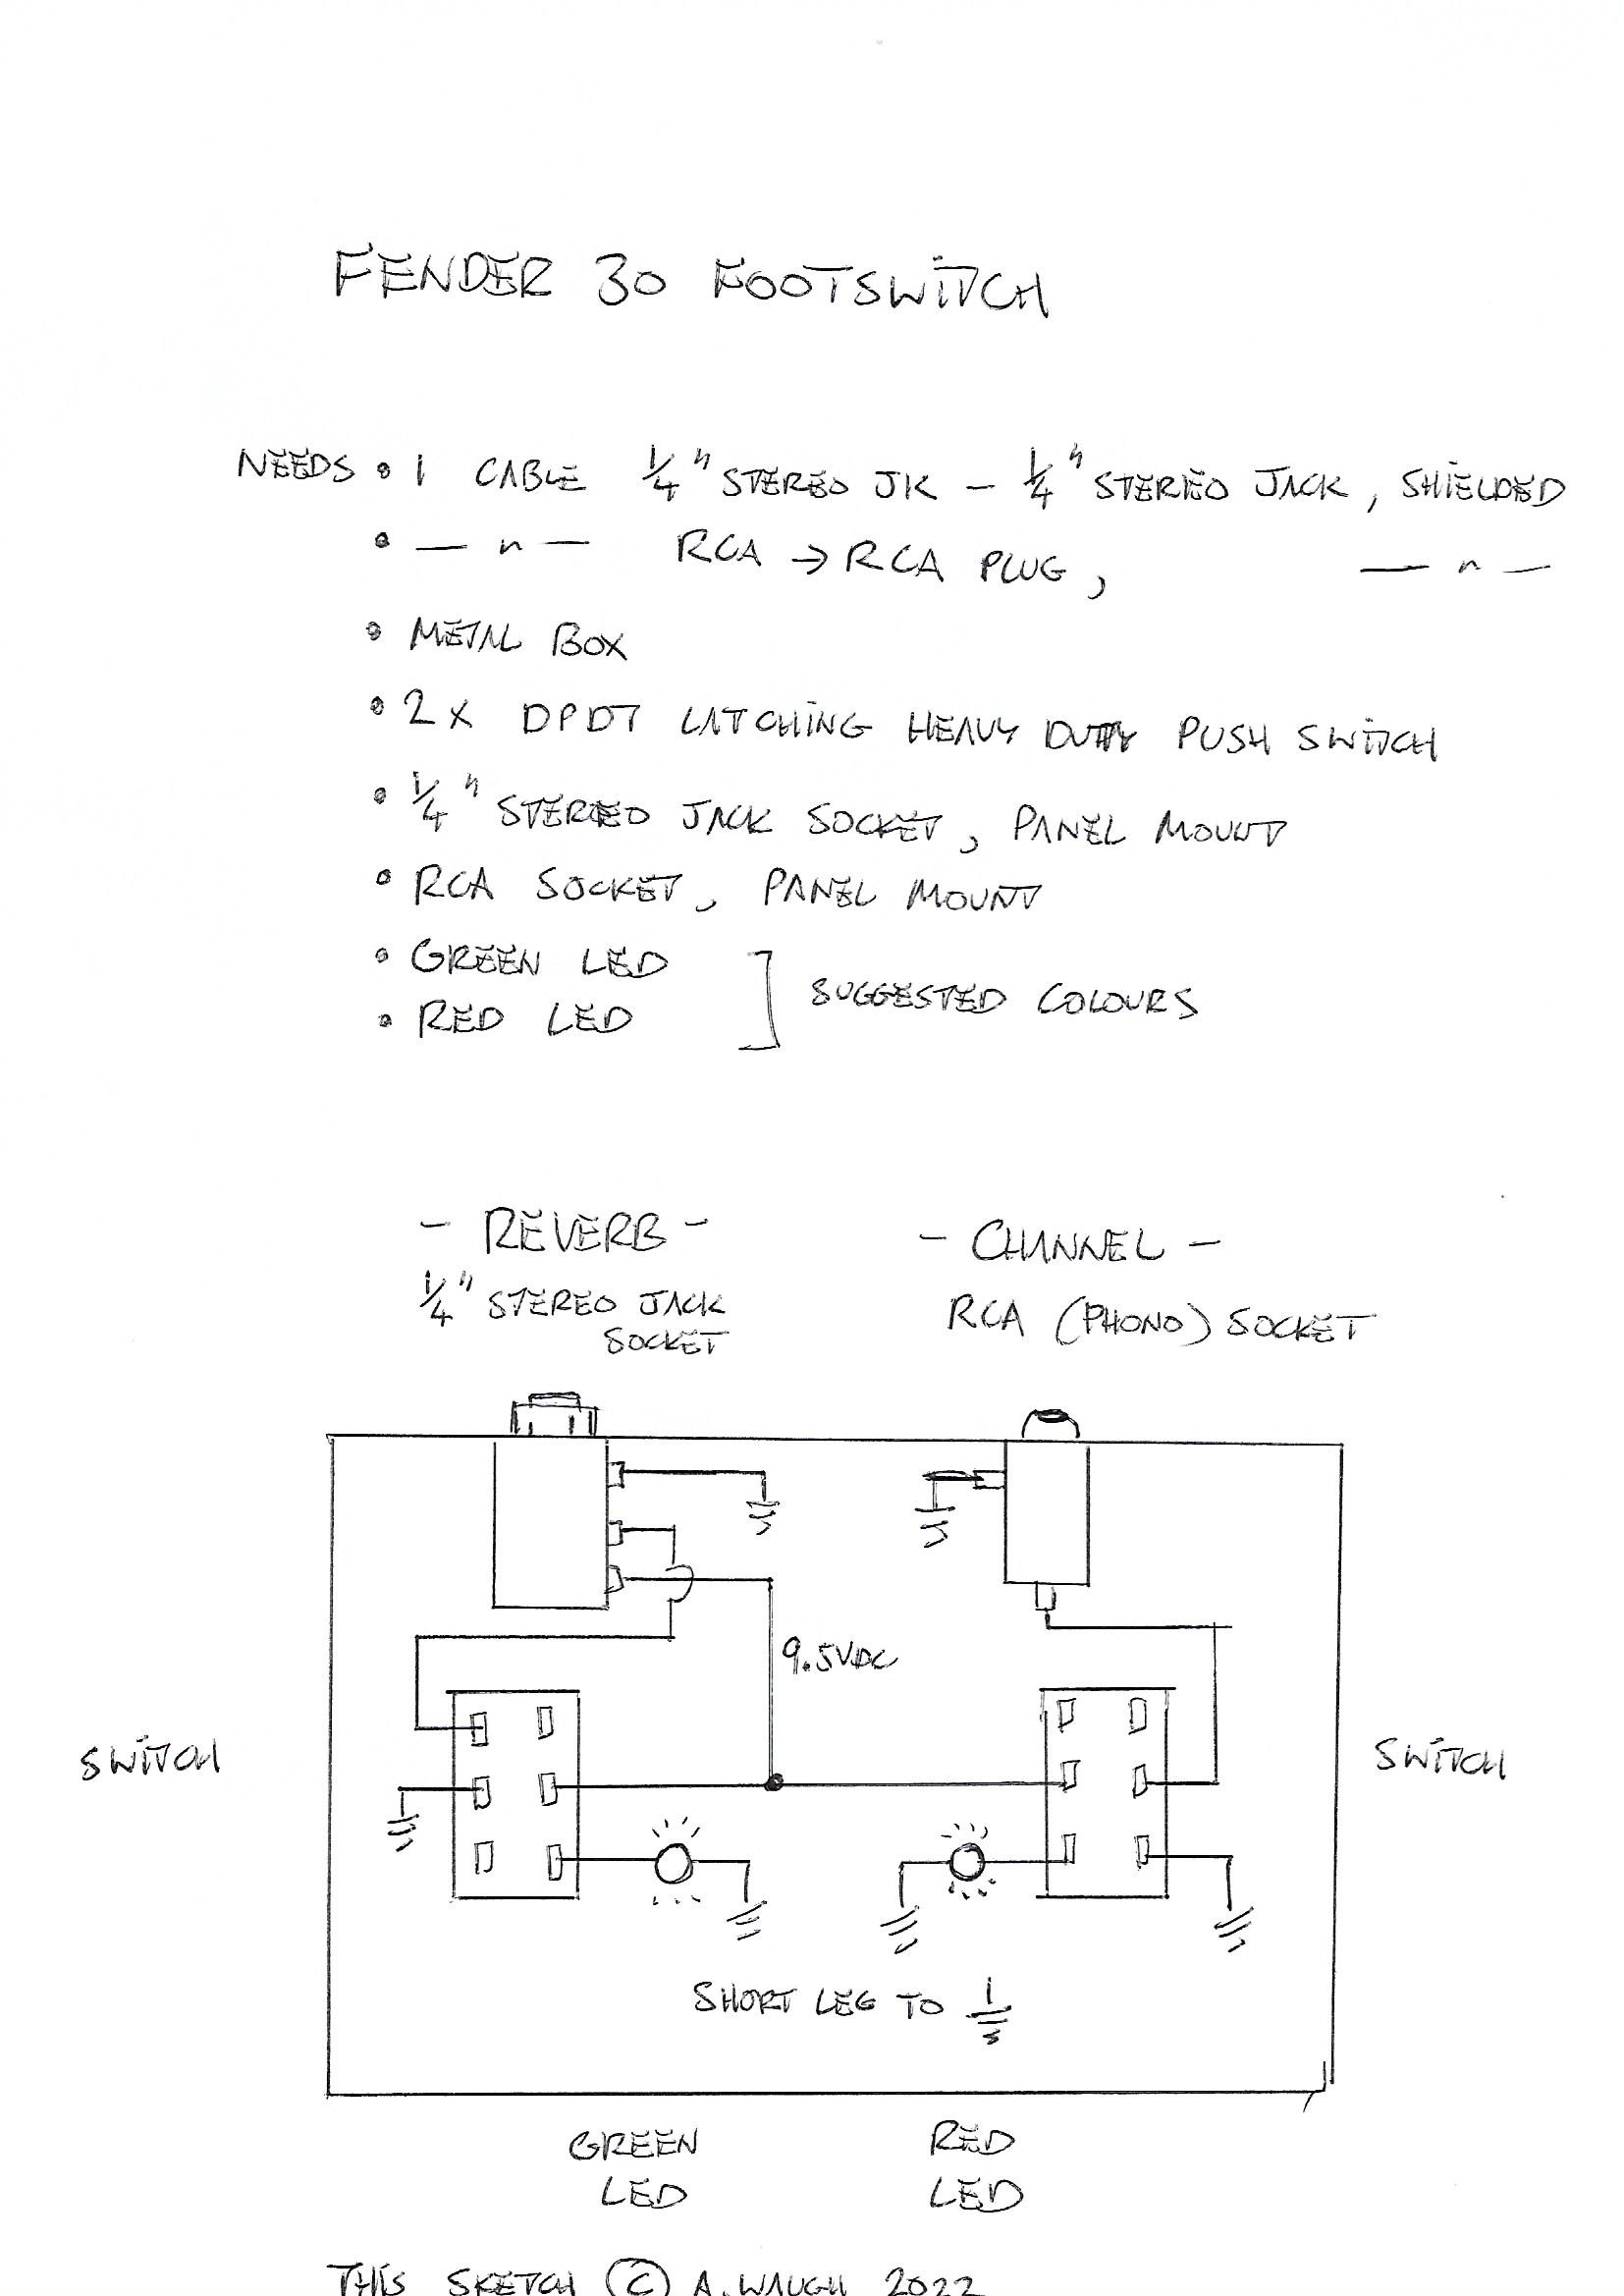 Fender 30
        footswitch wiring diagram